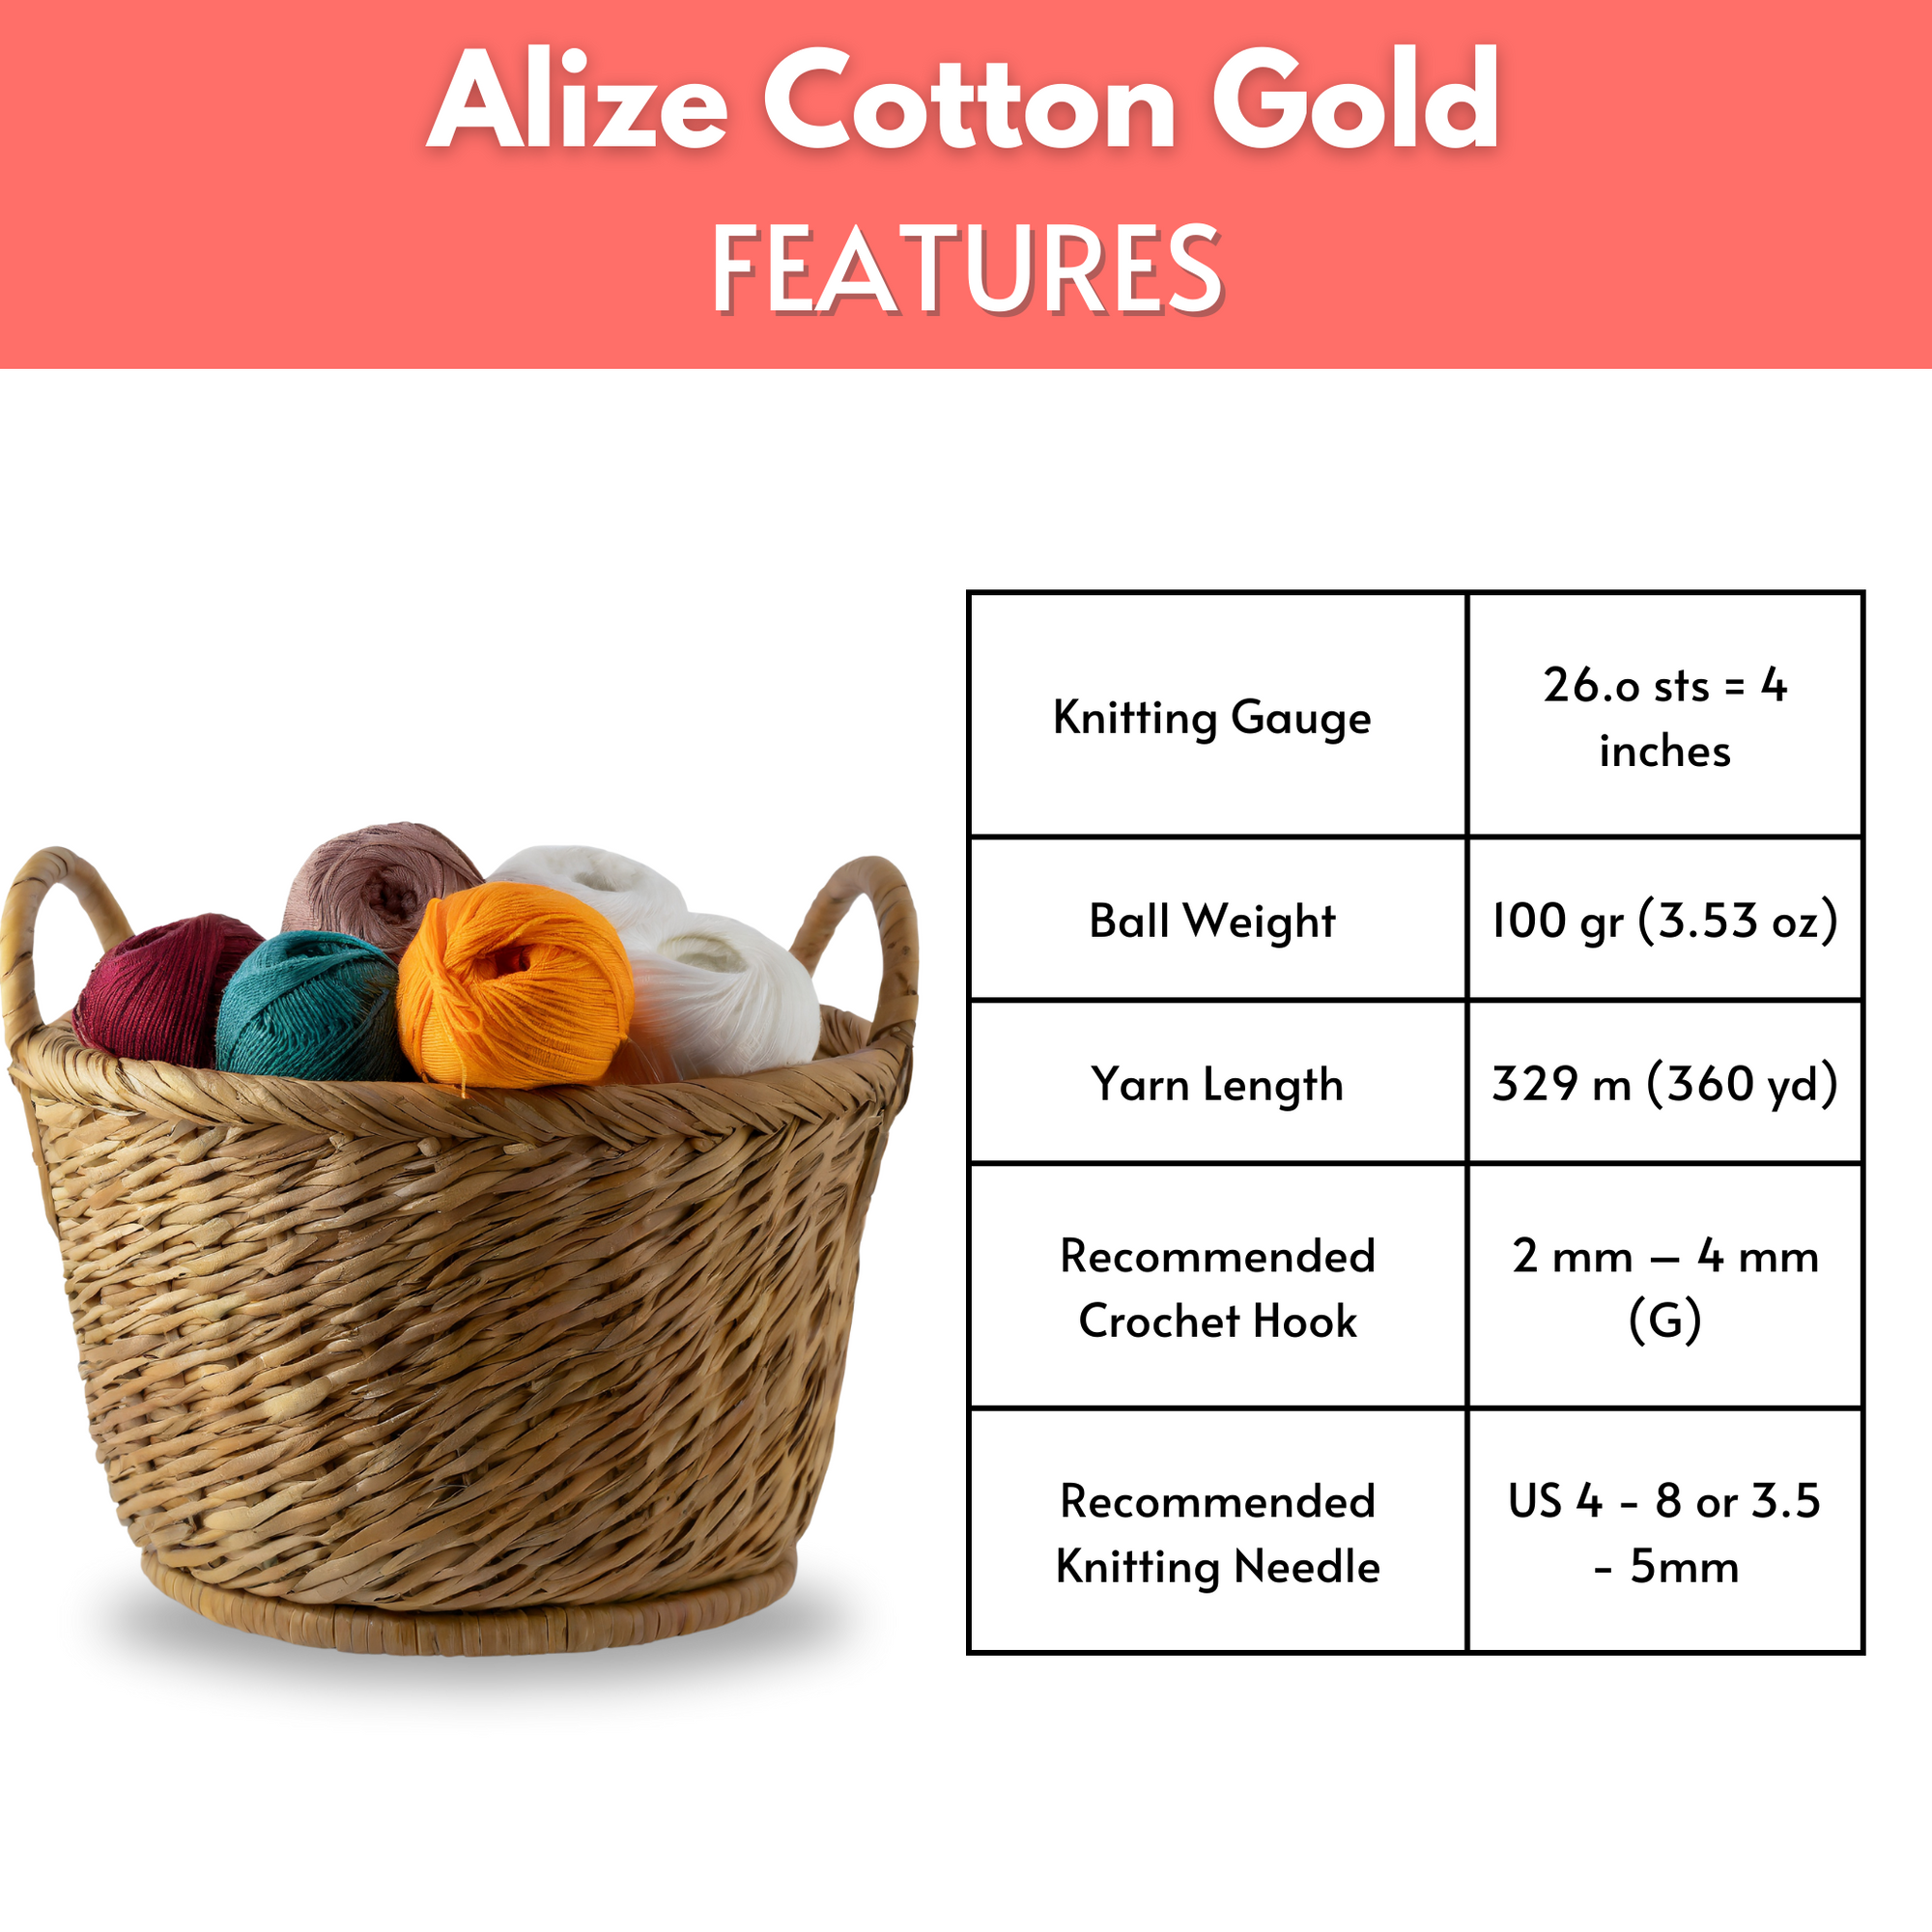 Alize Cotton Gold Knitting Yarn, Caramel - 499